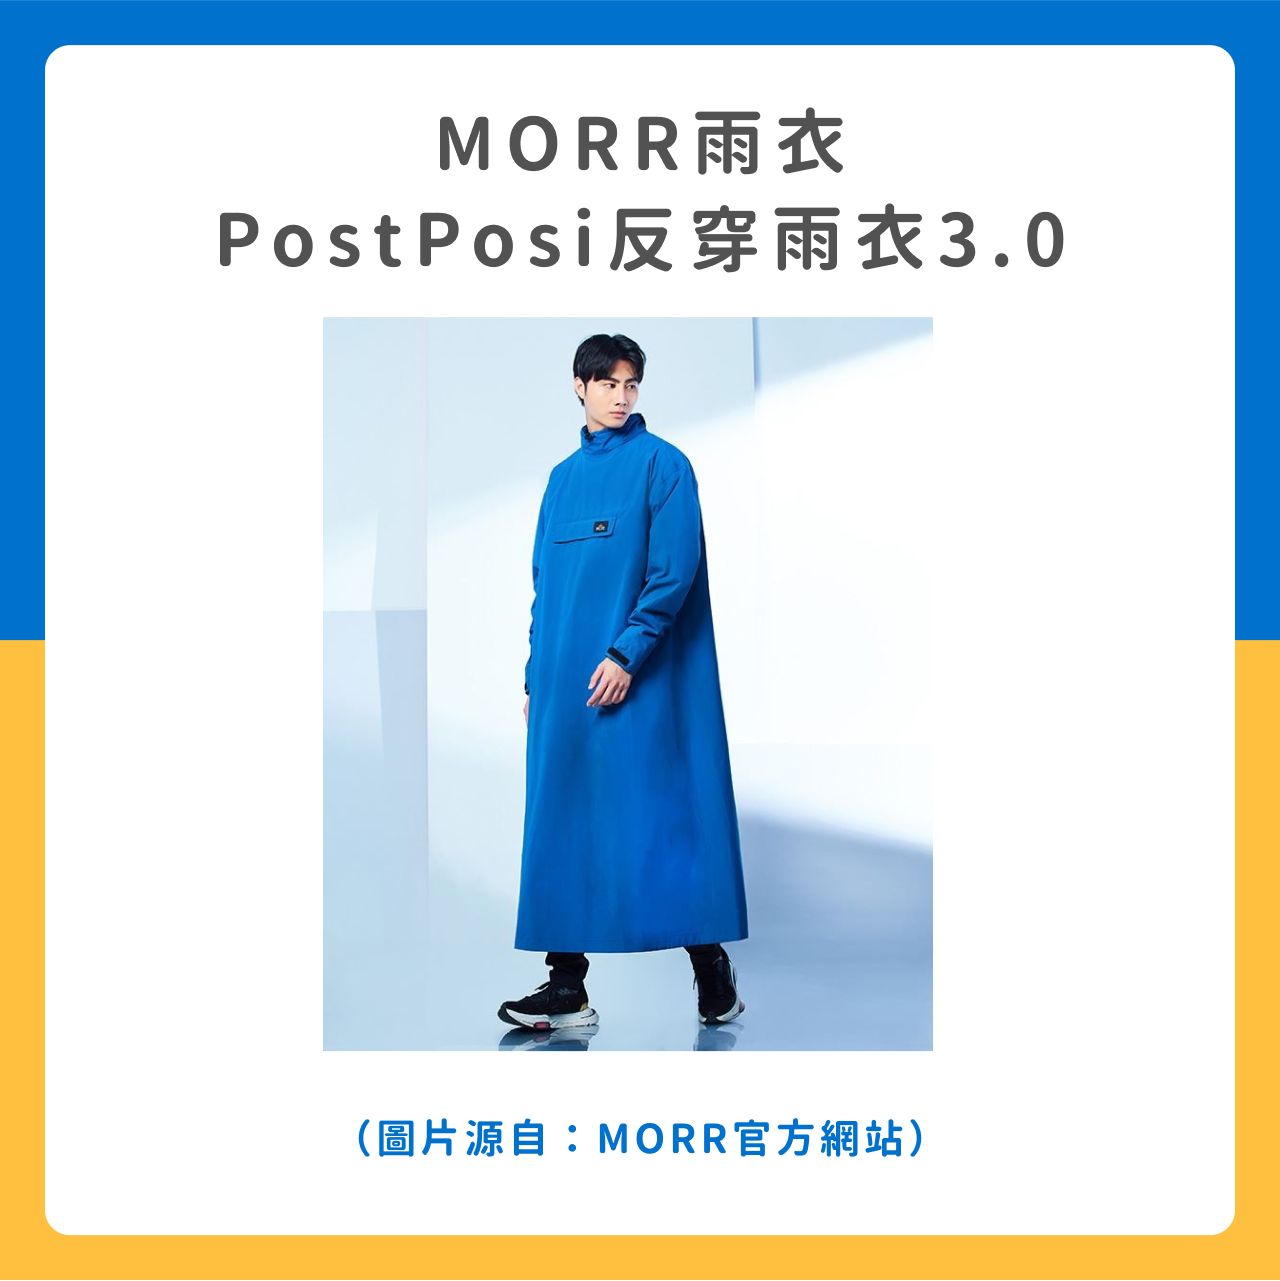 MORR雨衣 PostPosi反穿雨衣3.0